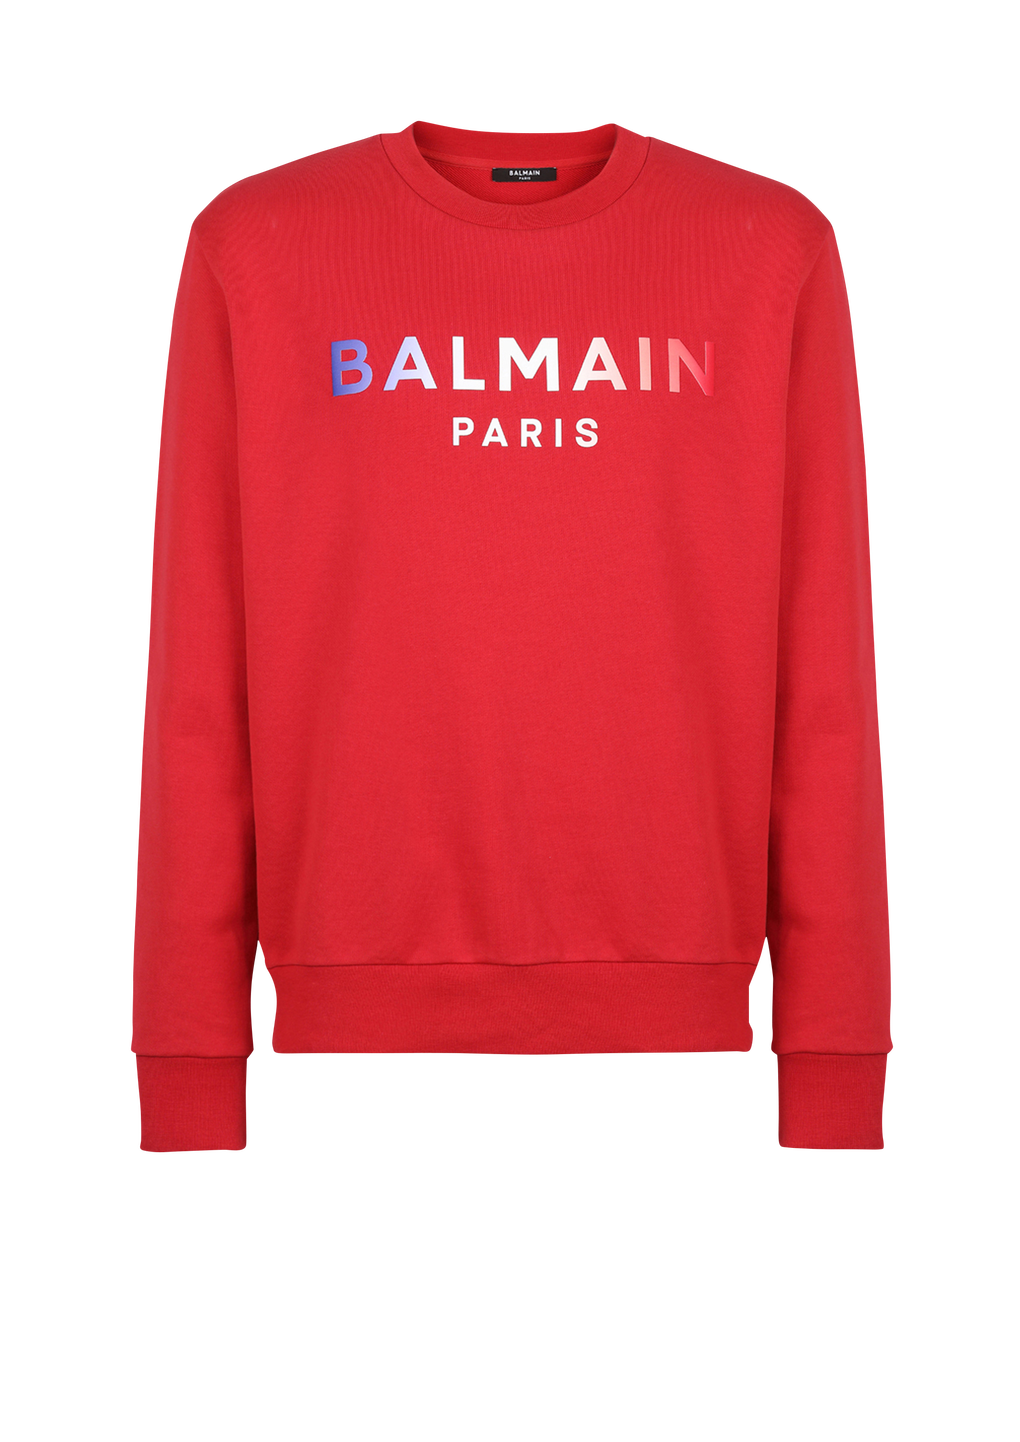 HIGH SUMMER CAPSULE - Sweat en coton imprimé tie and die logo Balmain Paris, rouge, hi-res